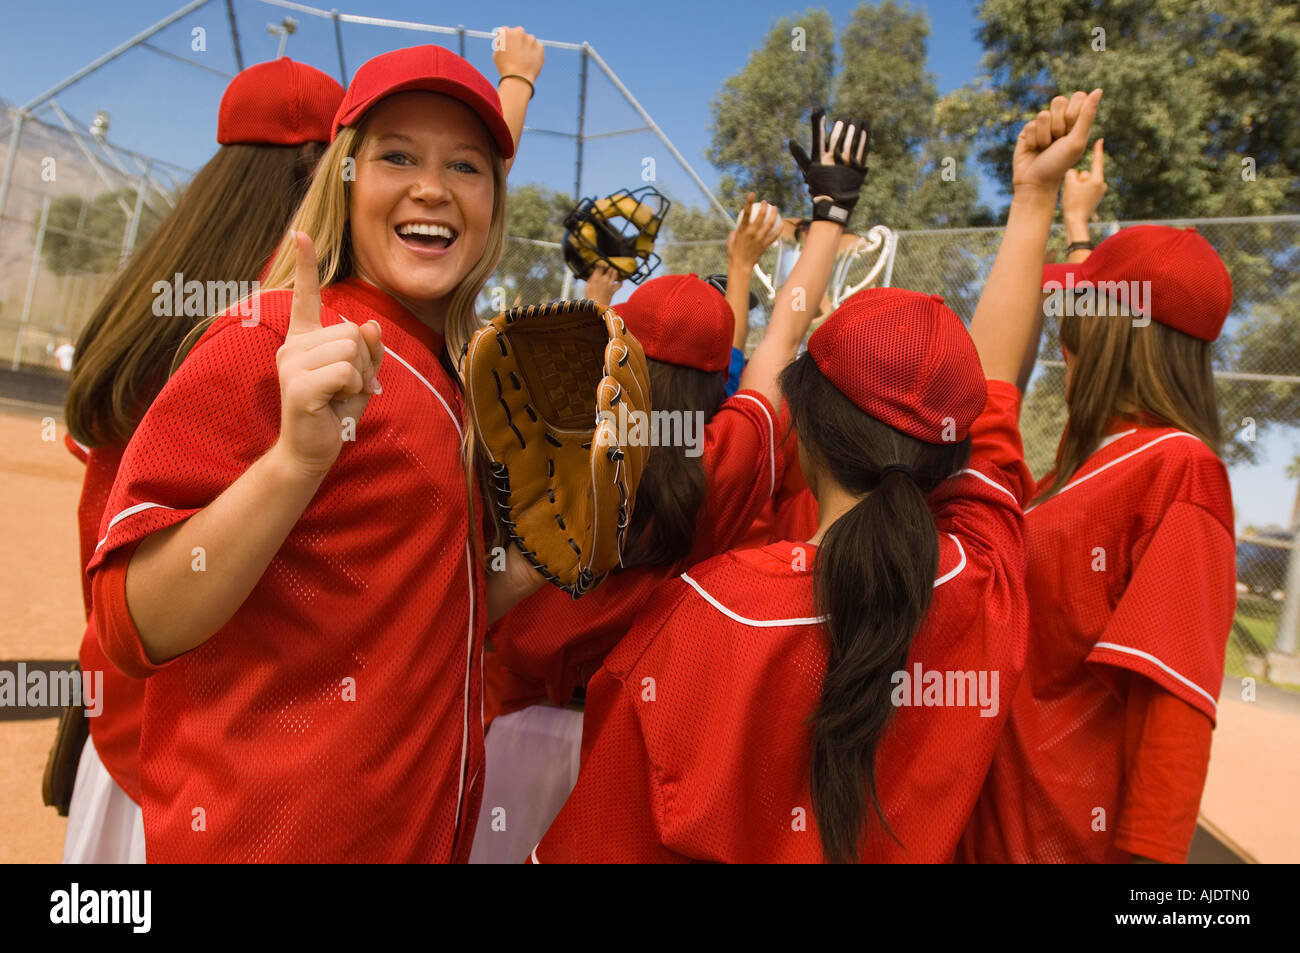 Women's softball team celebrating Stock Photo